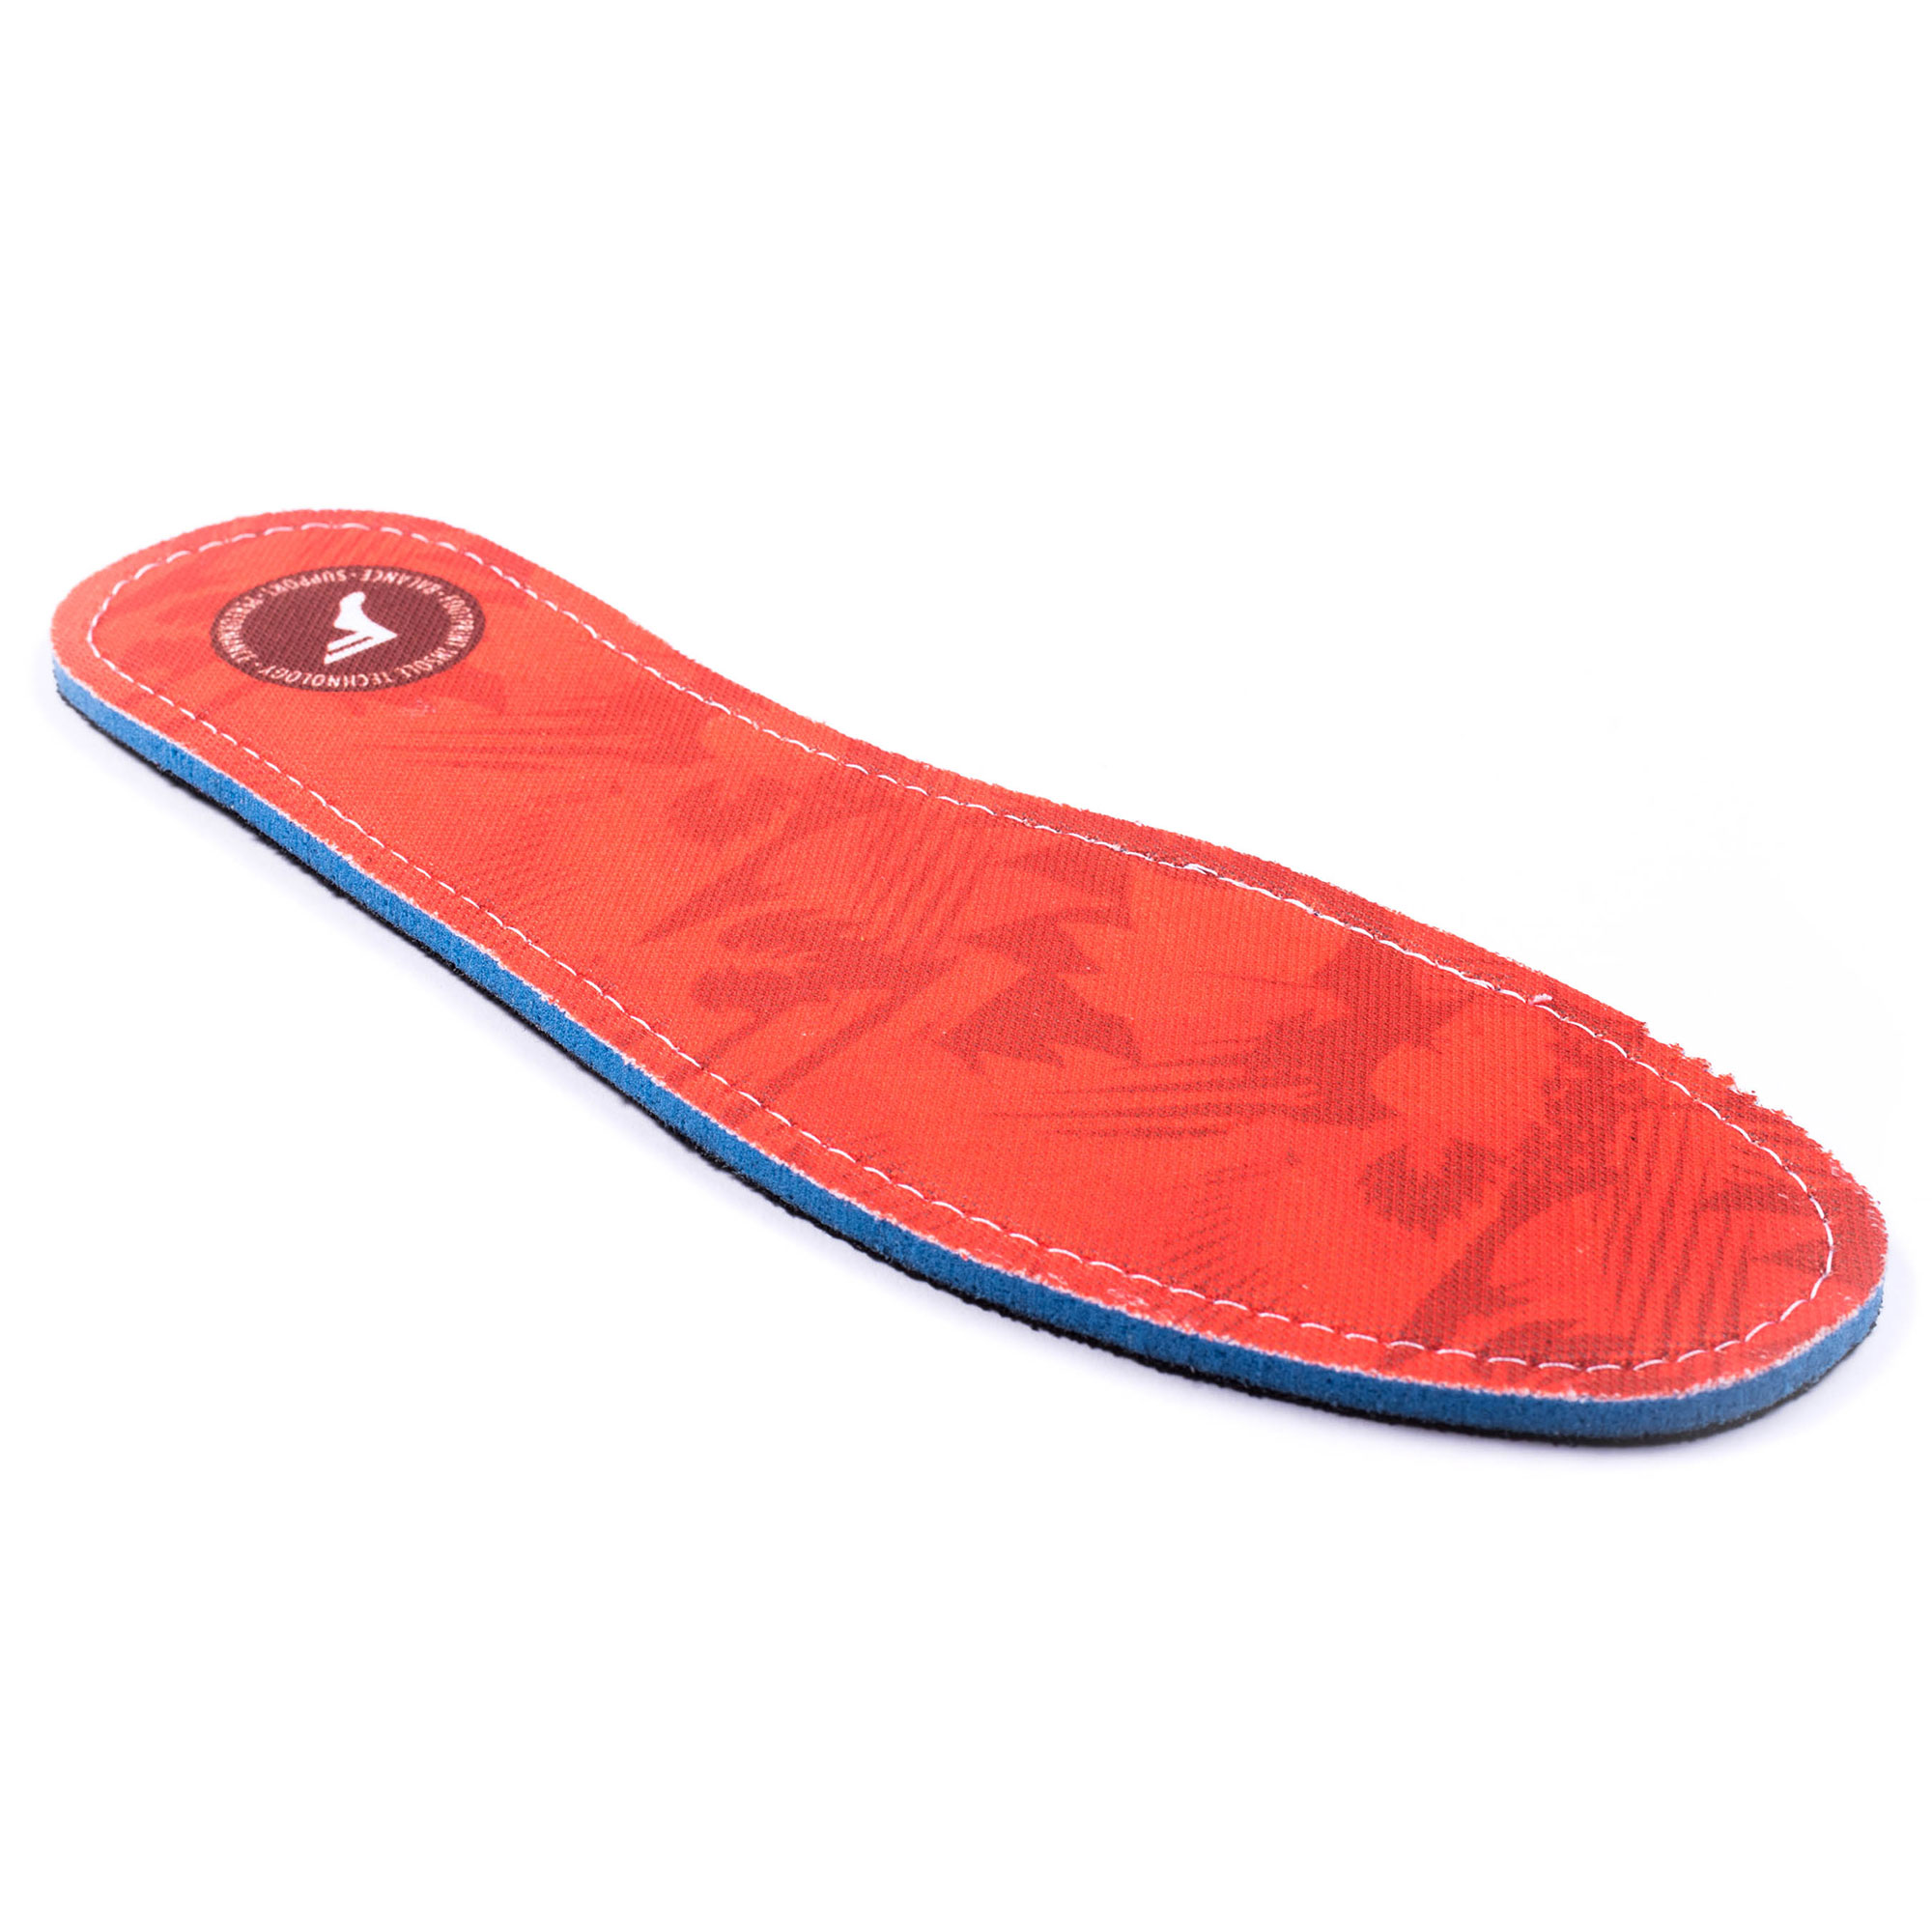 Footprint Einlegesohlen Kingfoam Flat - 5mm Profil (red camo)